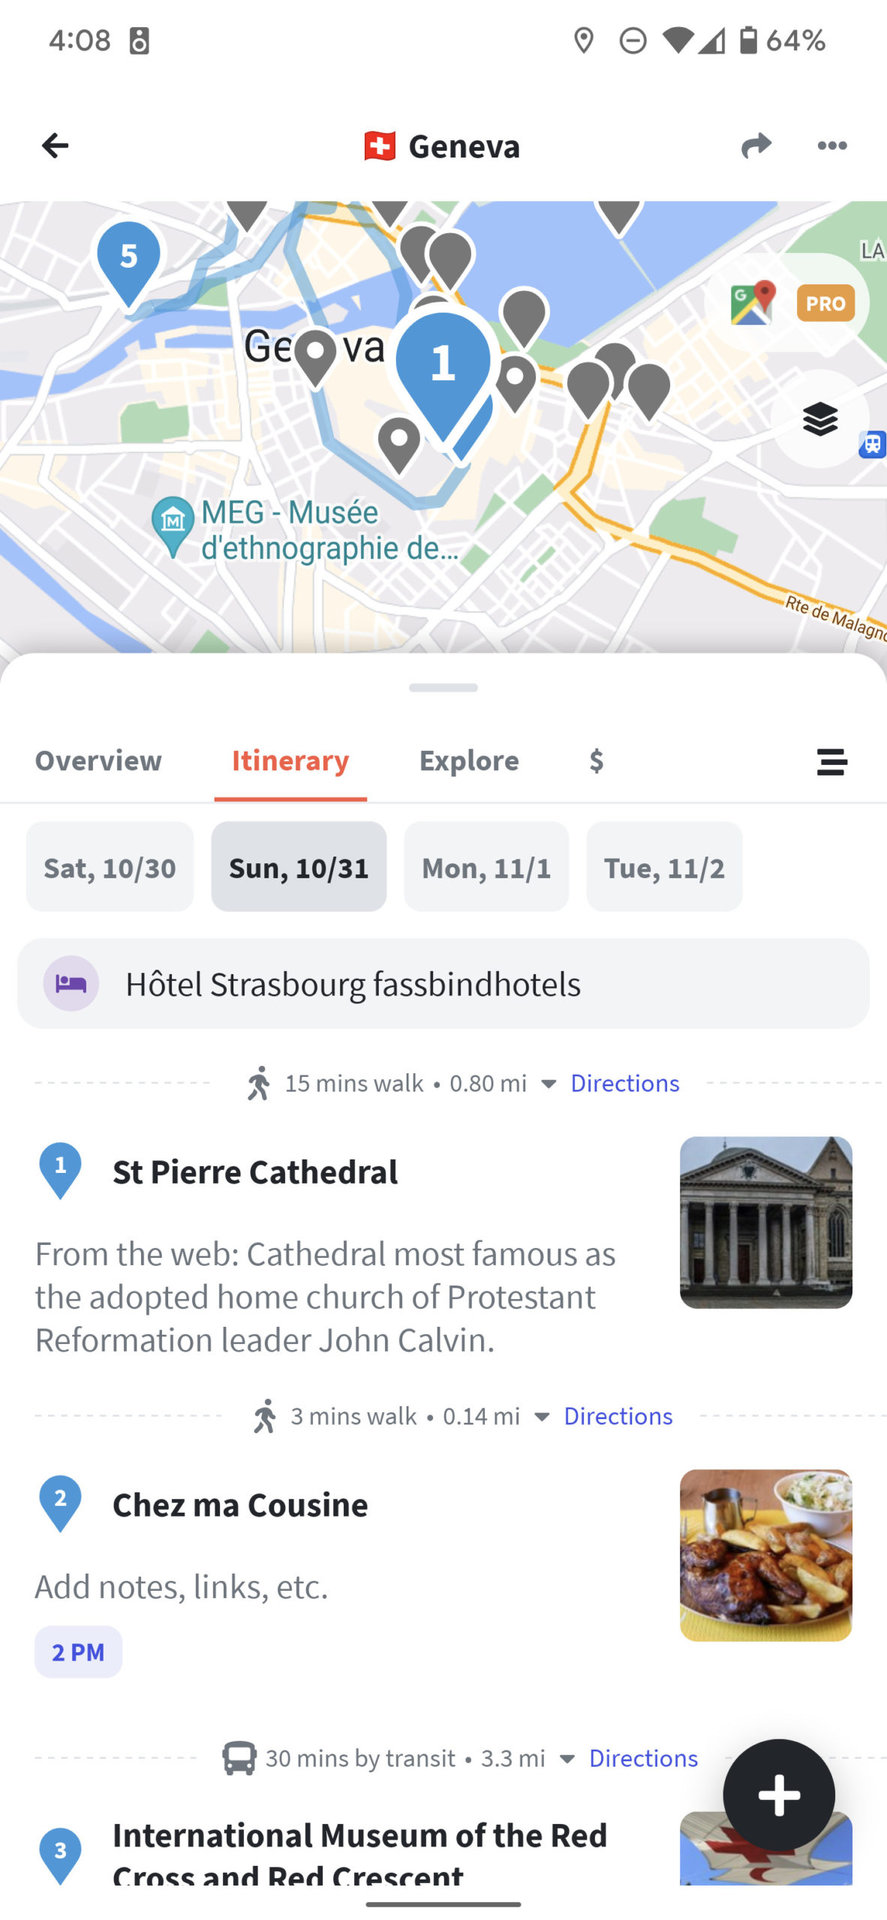 wanderlog travel planning app showing itinerary